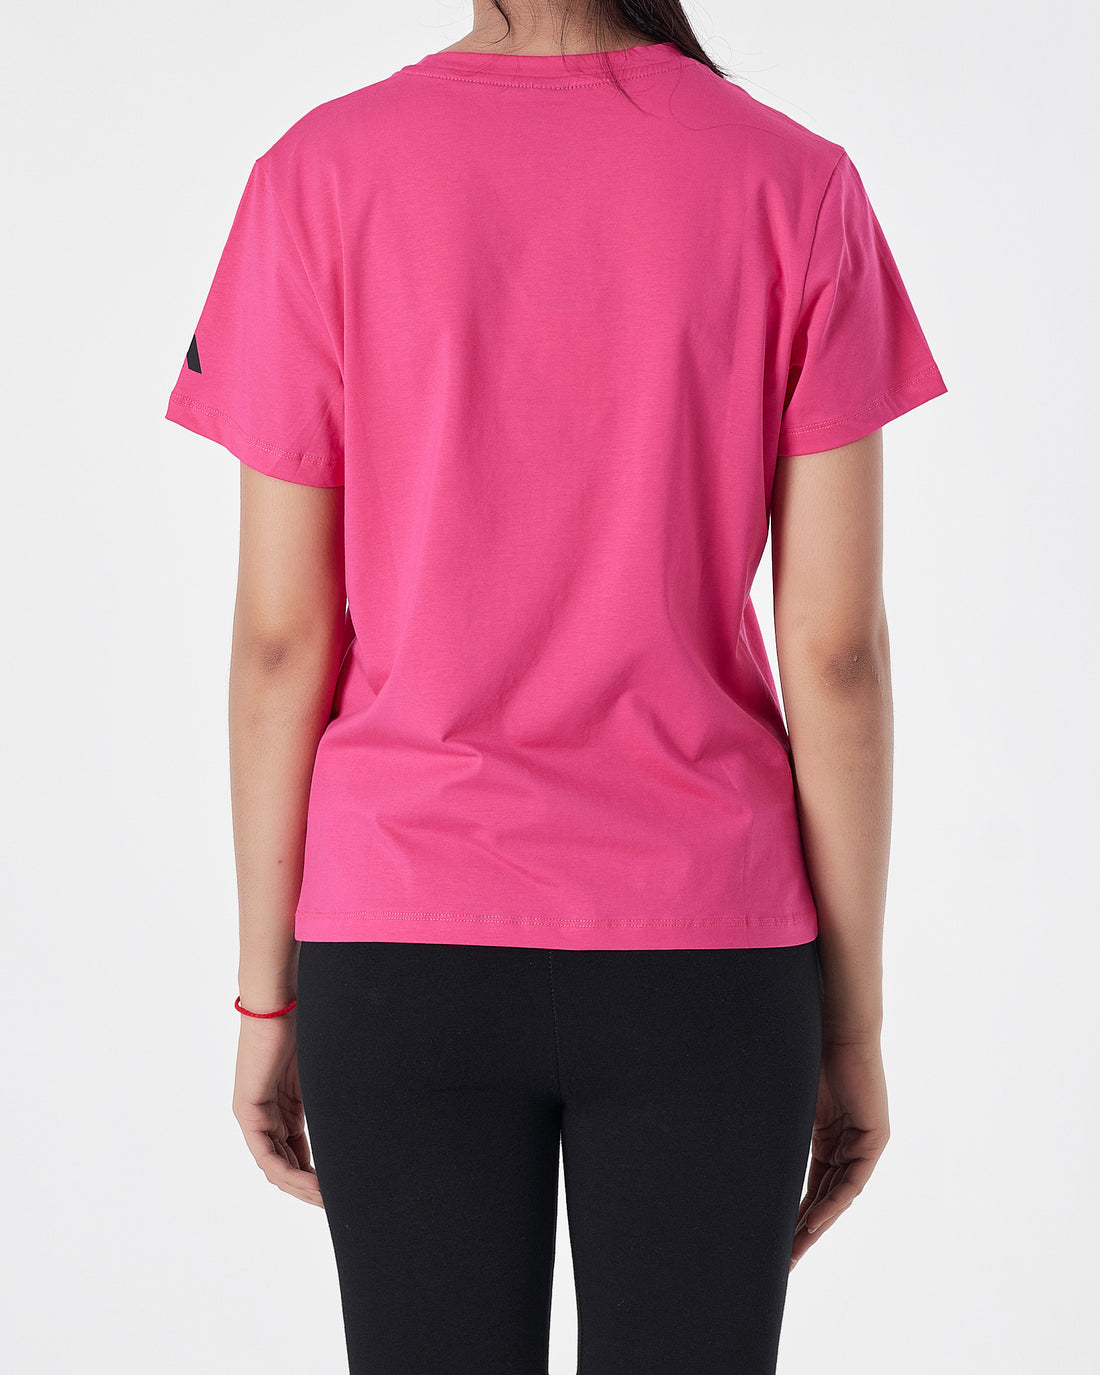 ADI Floral Logo Printed Lady Pink T-Shirt 14.50